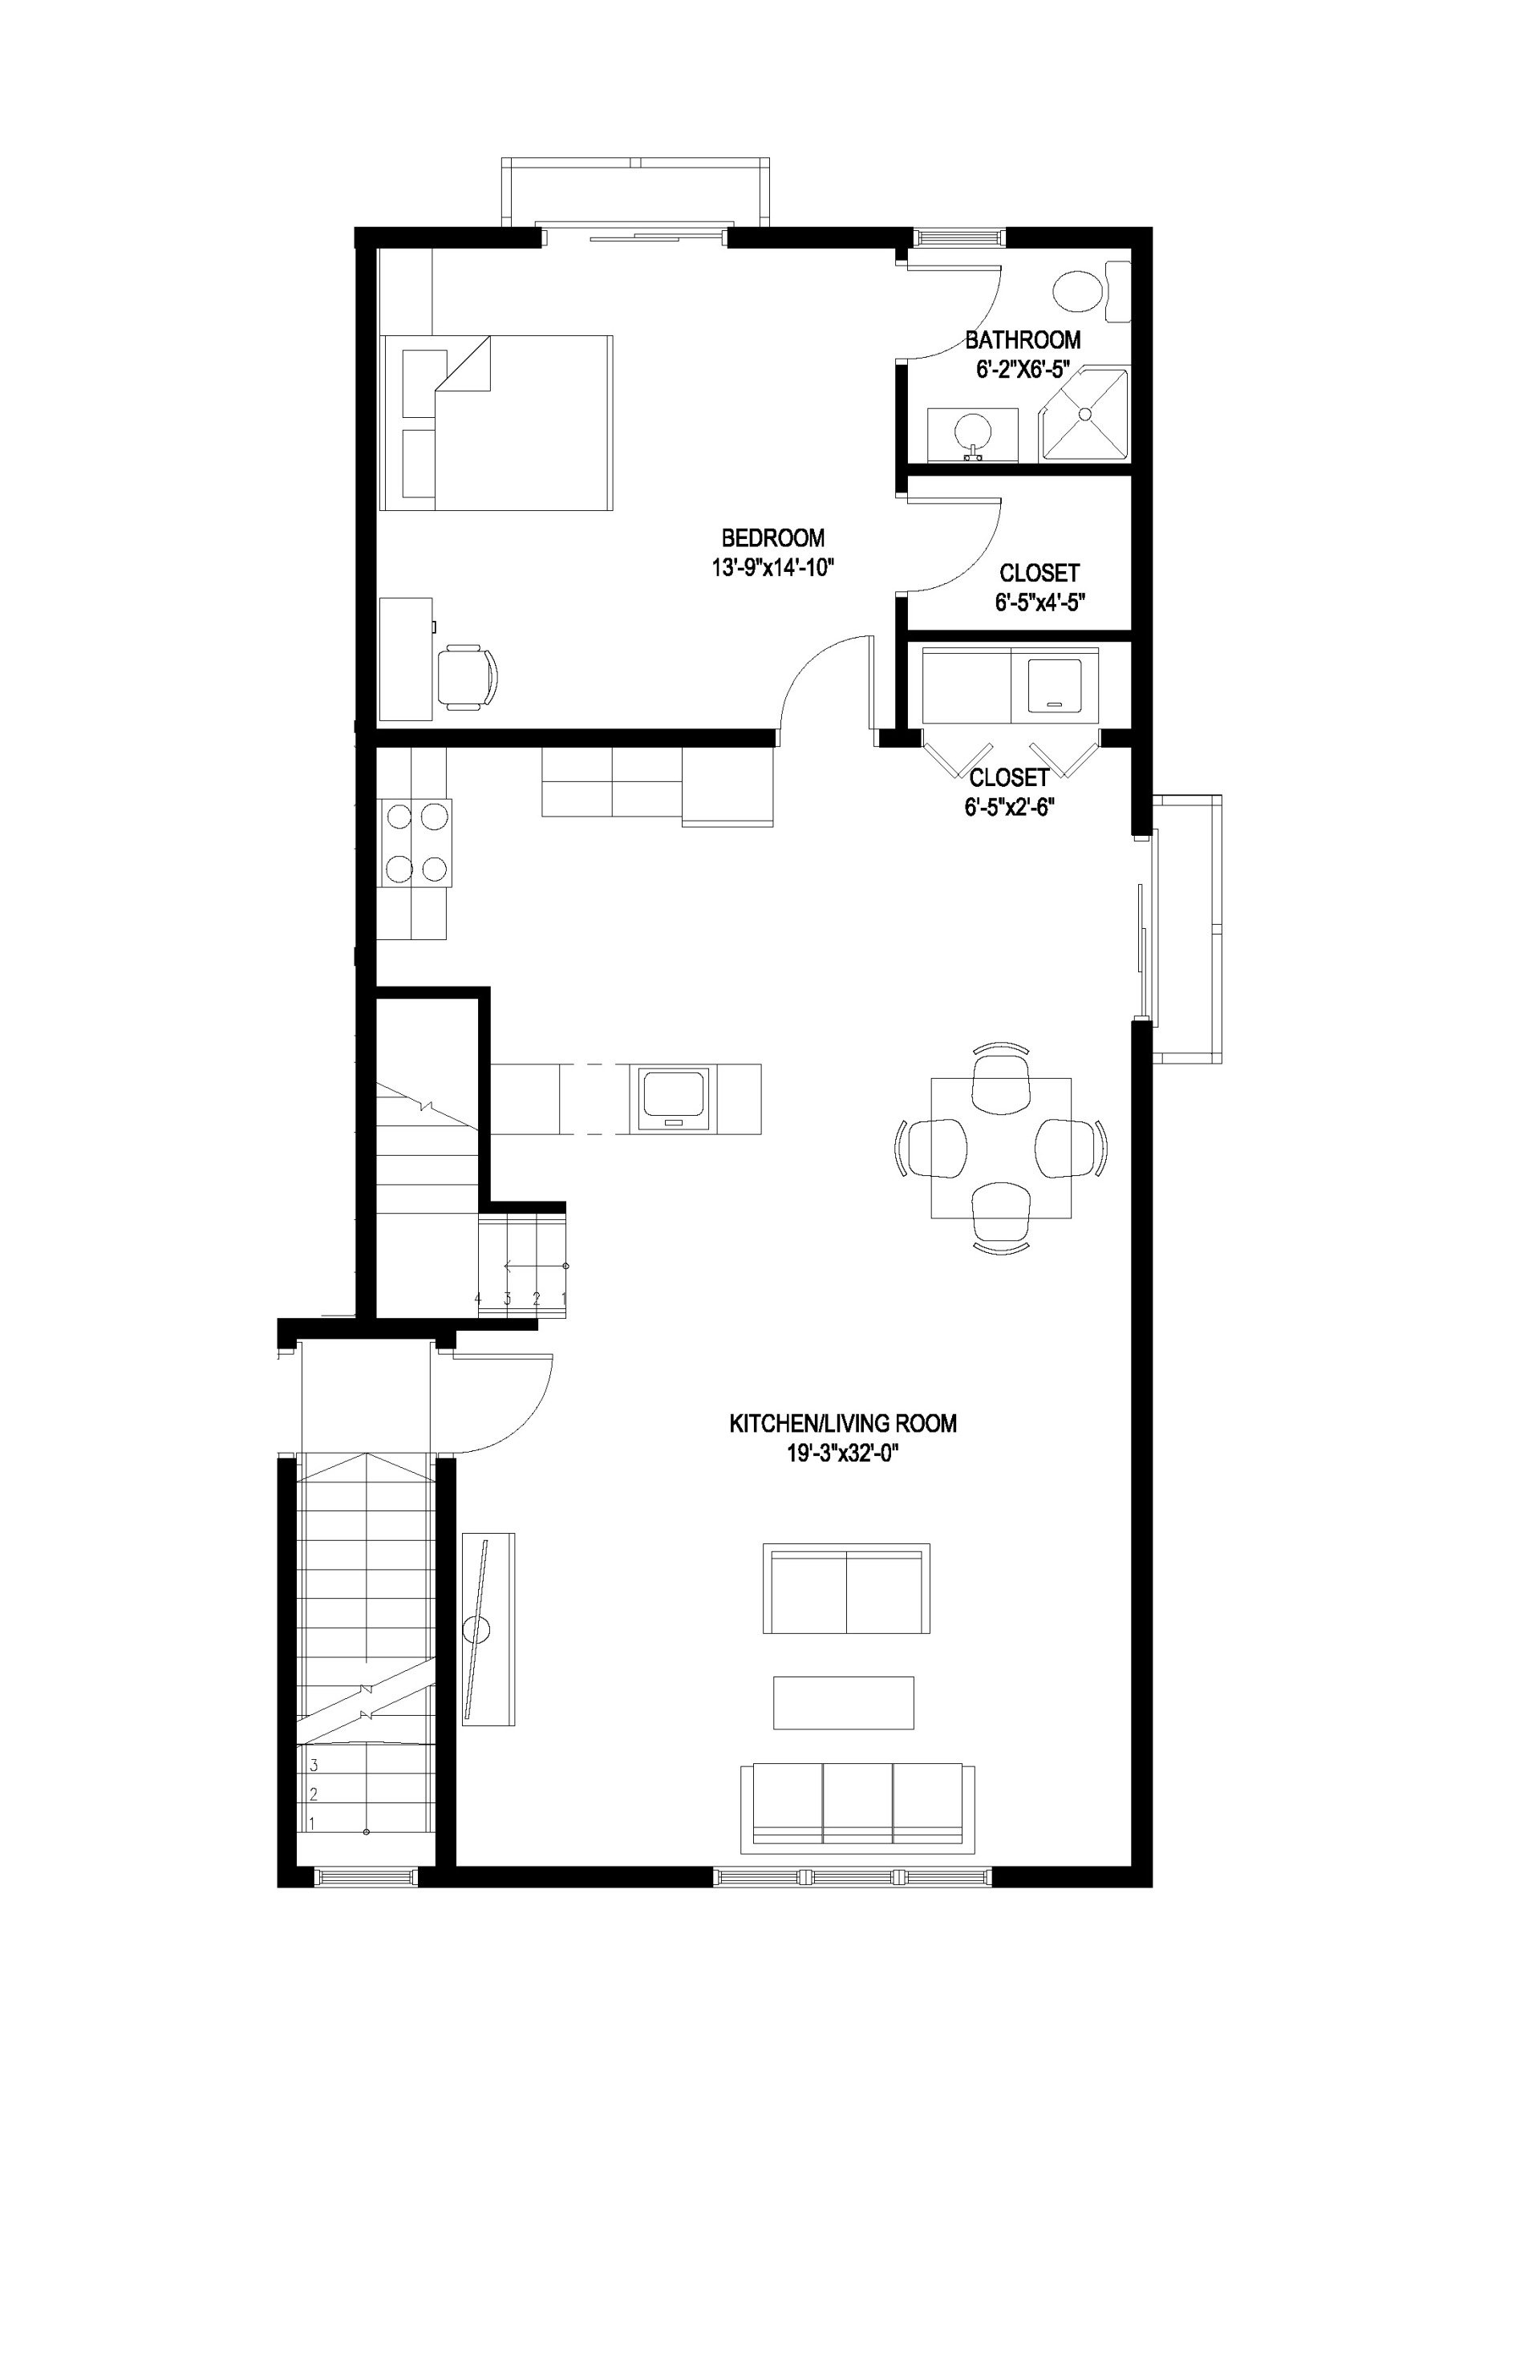 The Greylock Dollhouse Floor Plan